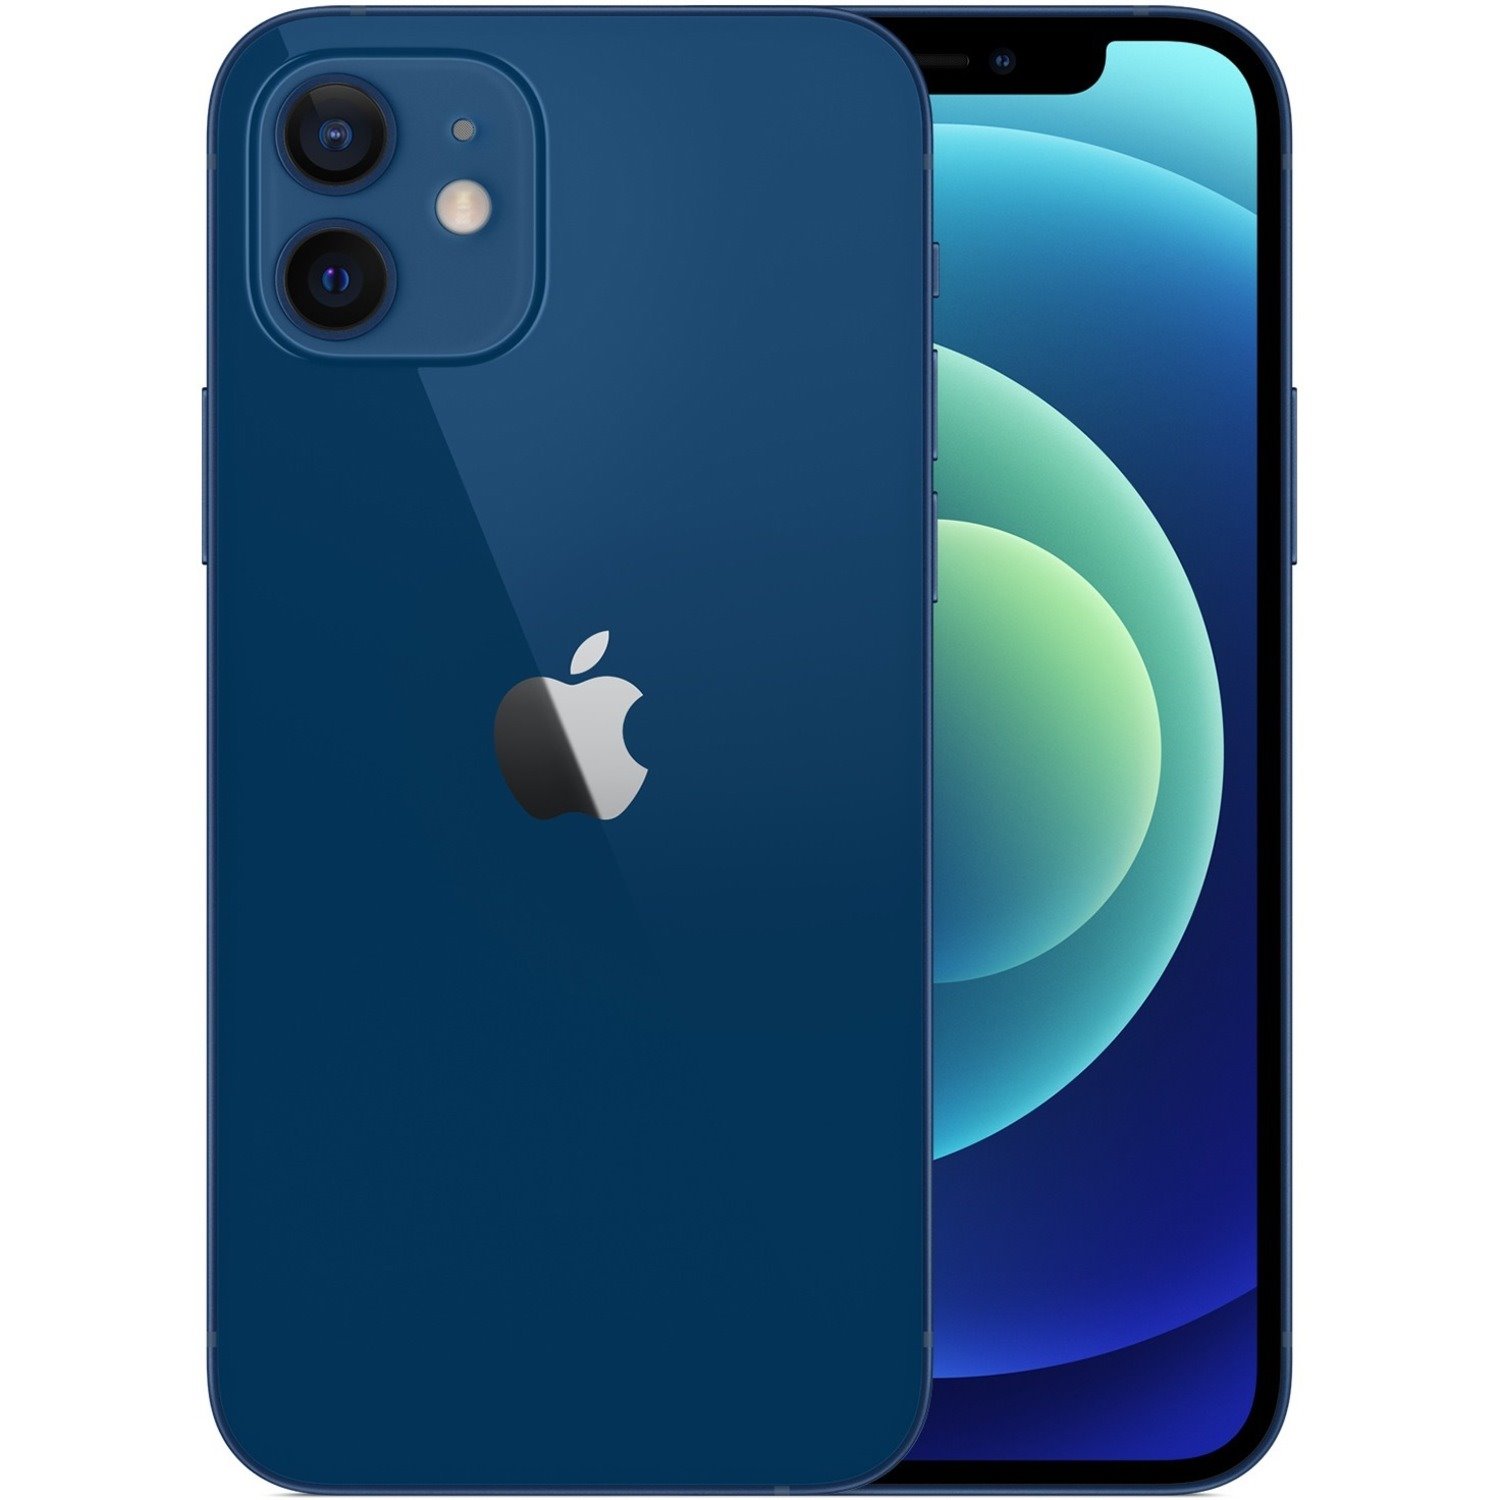 Apple iPhone 12 mini 256 GB Smartphone - 13.7 cm (5.4") OLED Full HD Plus 2340 x 1080 - Hexa-core (6 Core) - iOS 14 - 5G - Blue